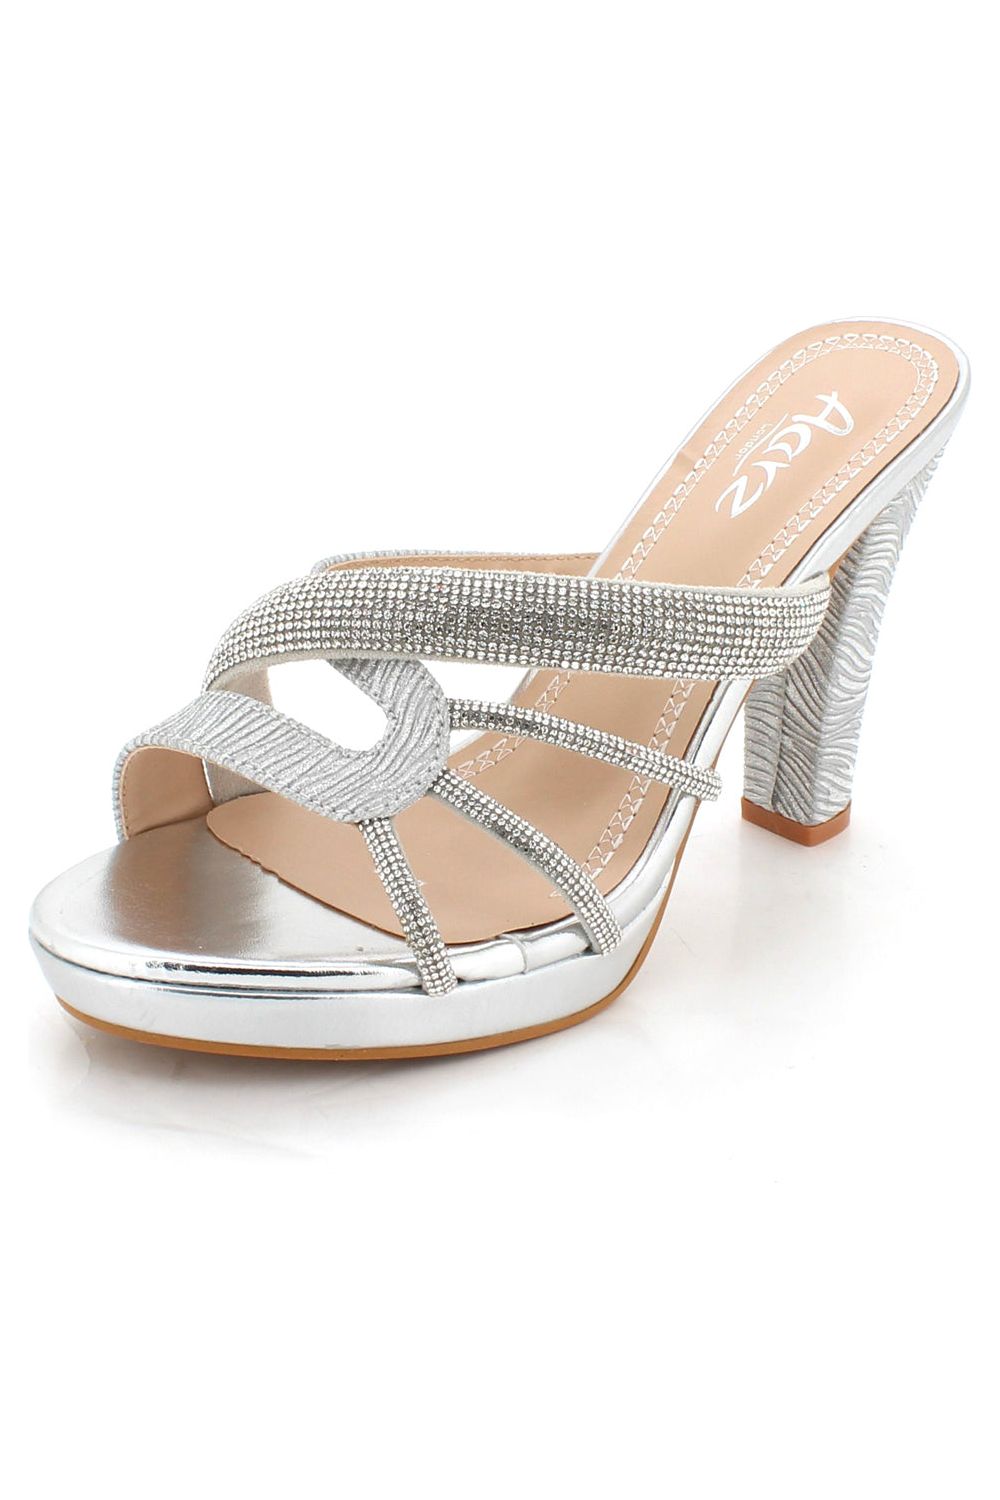 Diamante Evening Wedding Party Prom Sparkly High Stiletto Heel L8052